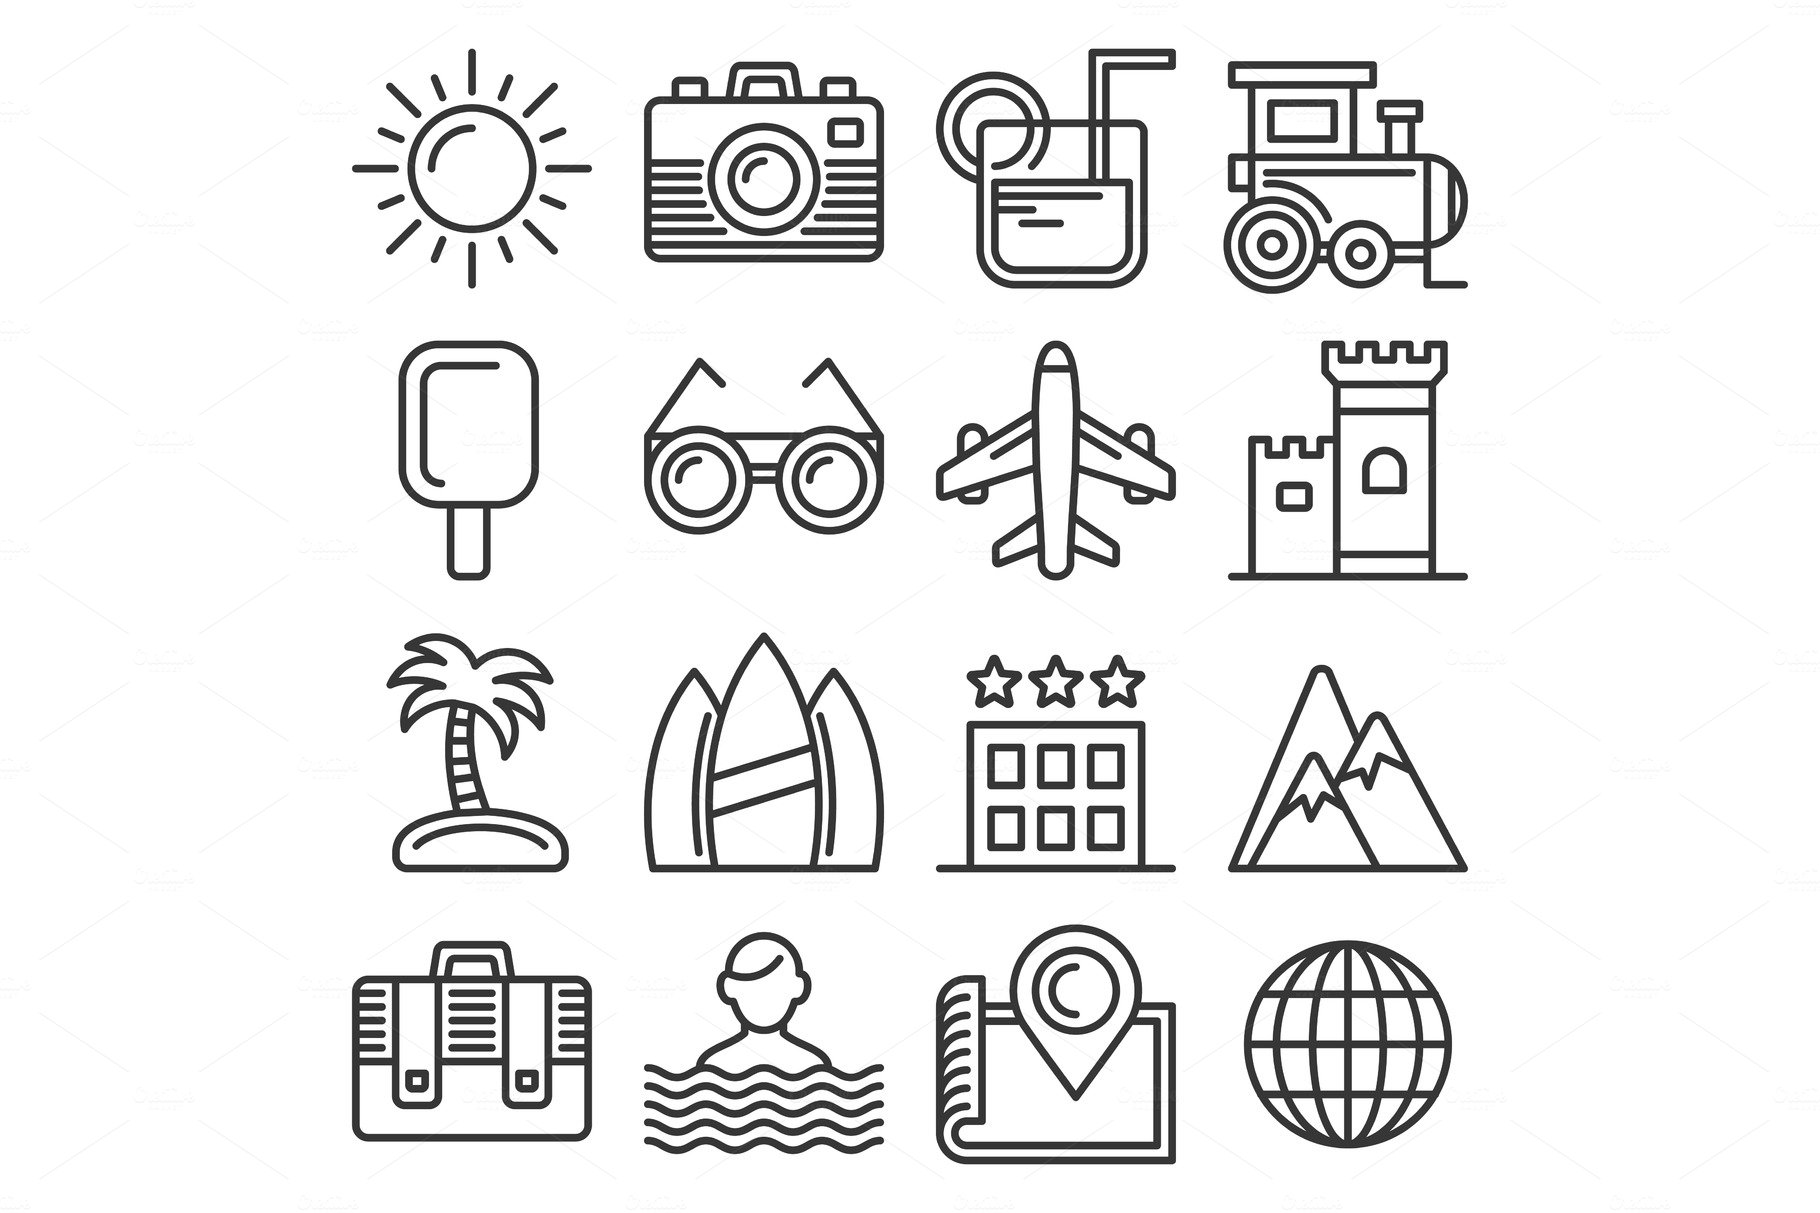 Summer Icons Set on White Background cover image.